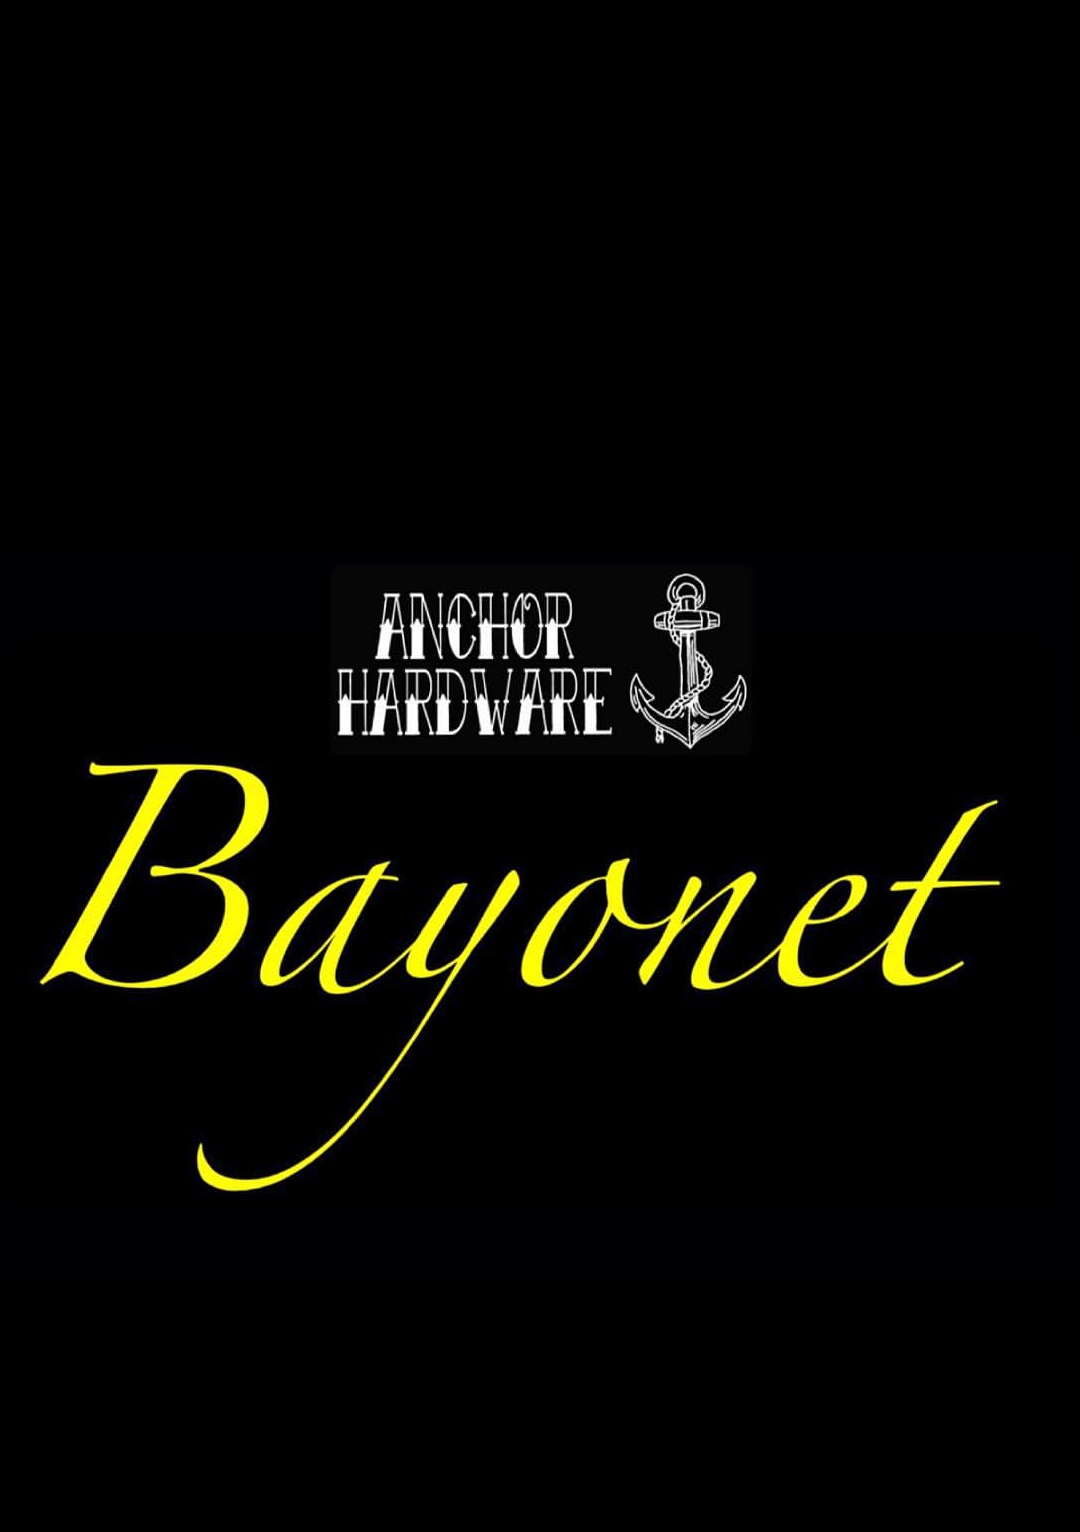 Anchor Hardware - Bayonet cover